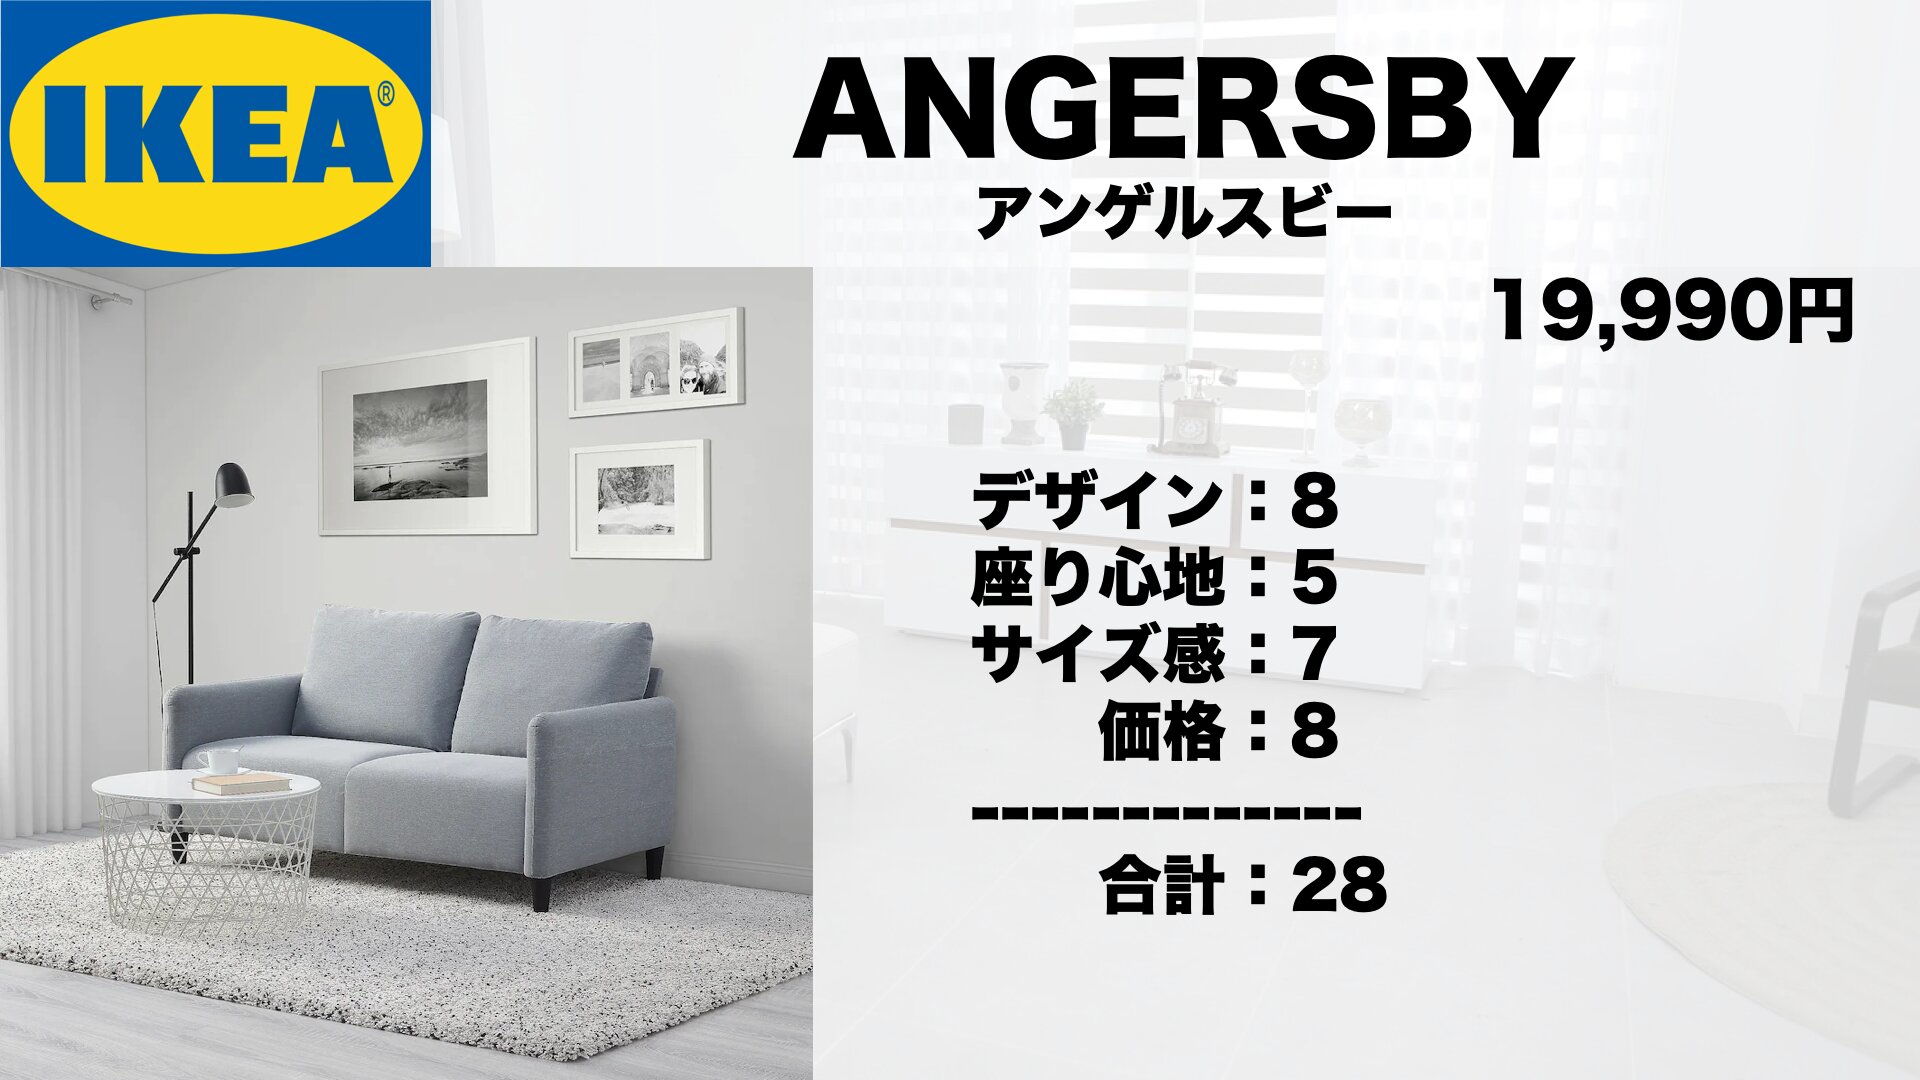 IKEA 2人掛けソファ ANGERSBY アンゲルスビー - ソファ/ソファベッド